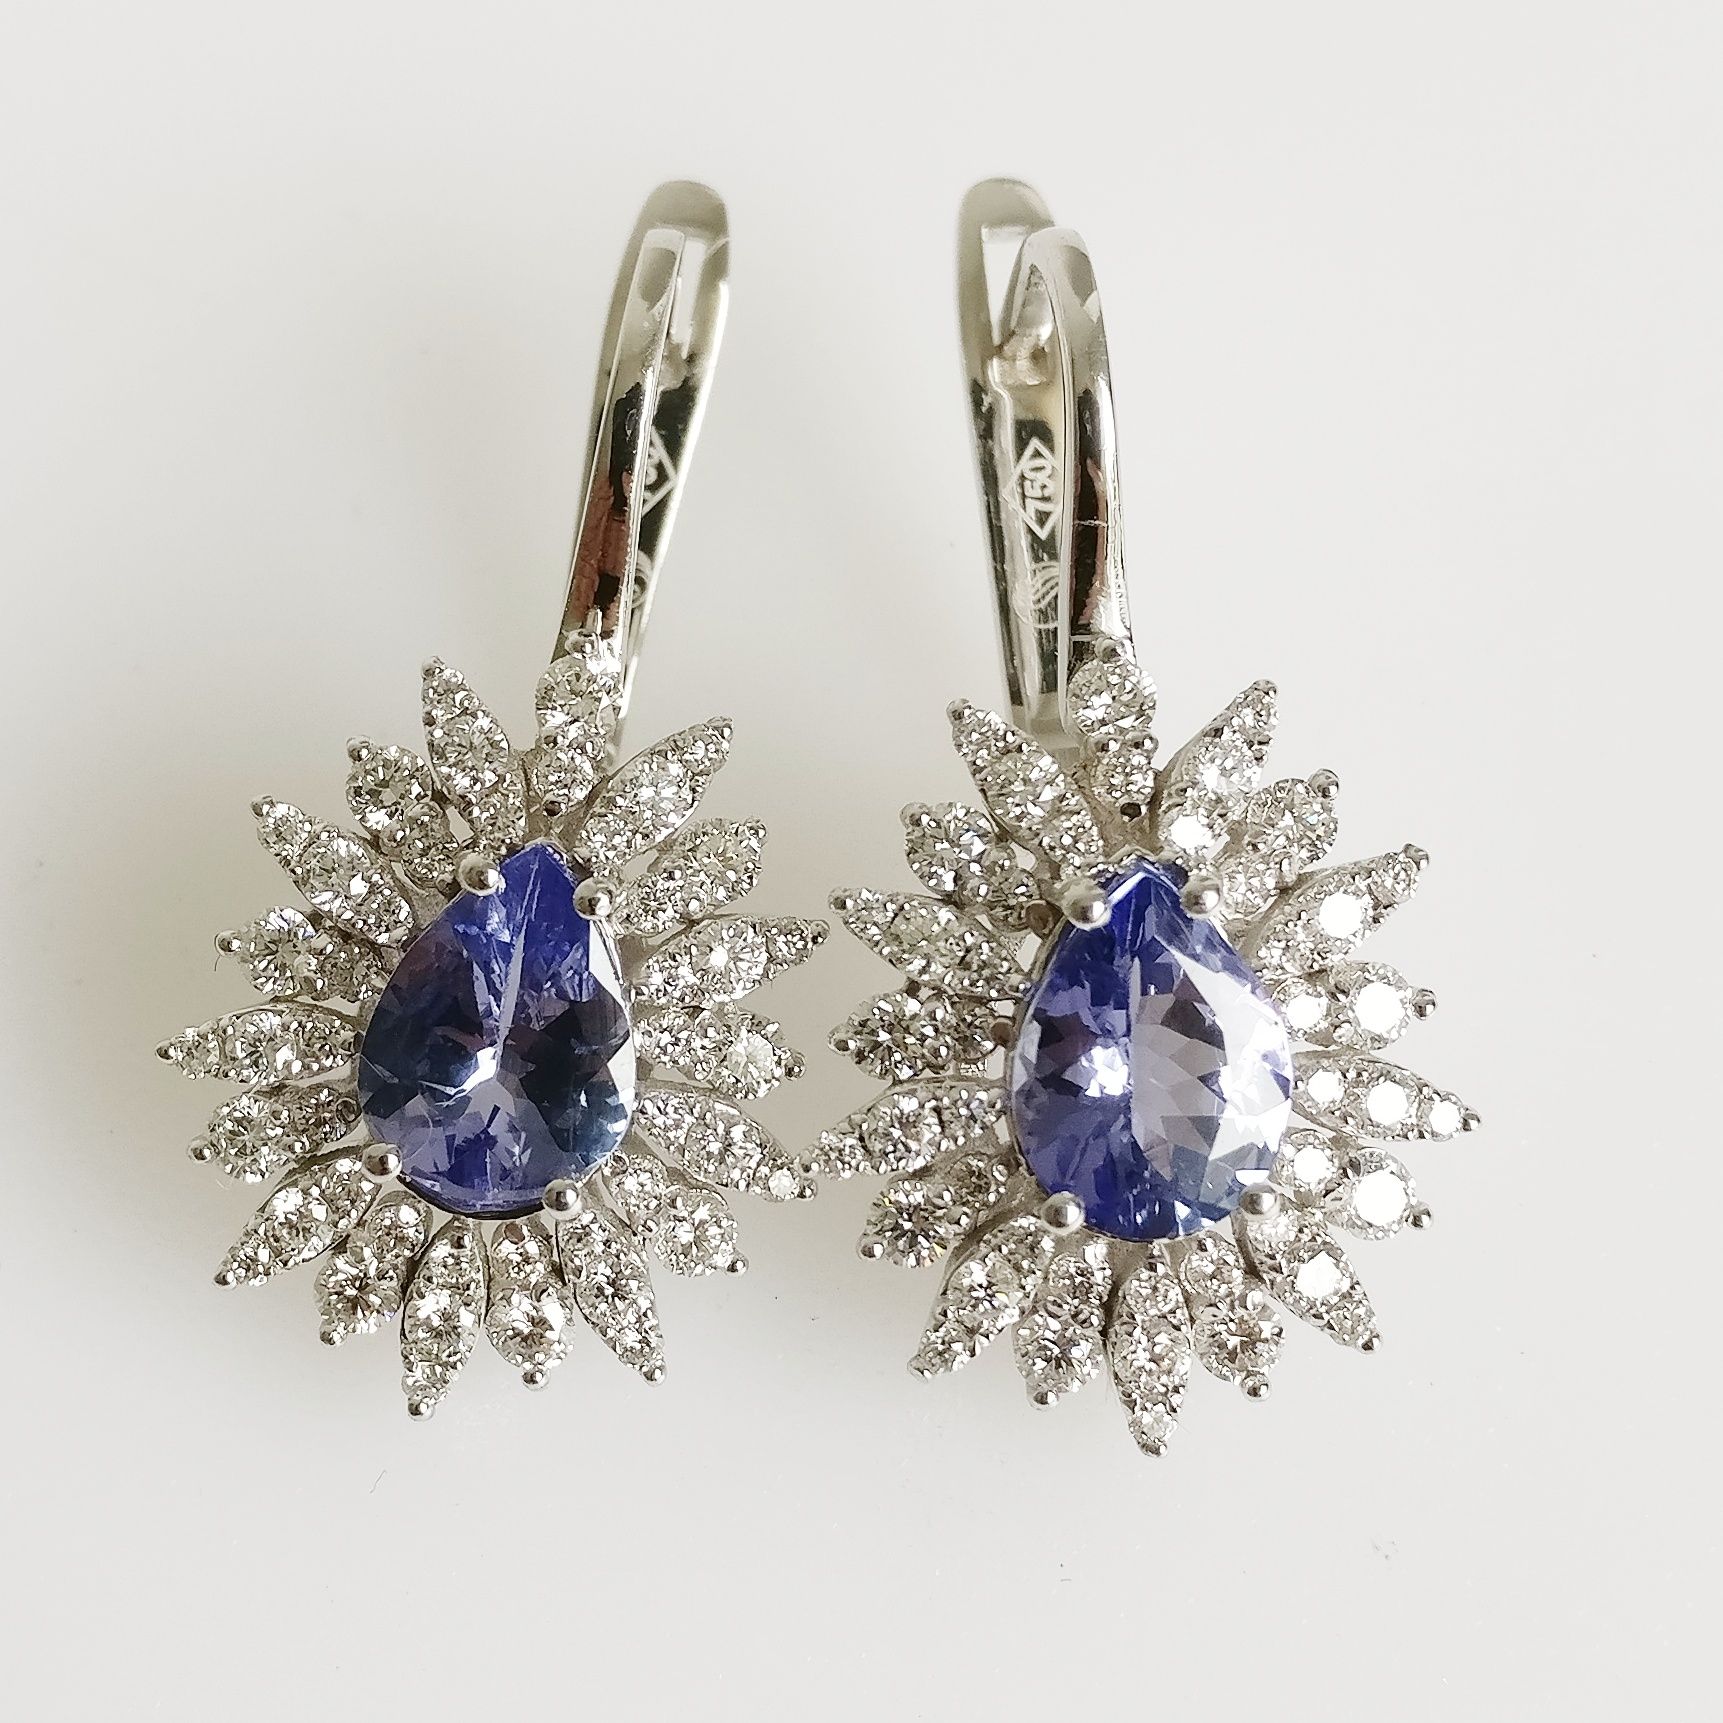 Tanzanite and Diamond Earrings 3.19ct Tanzanite and Diamond Earrings
- Material:&hellip;